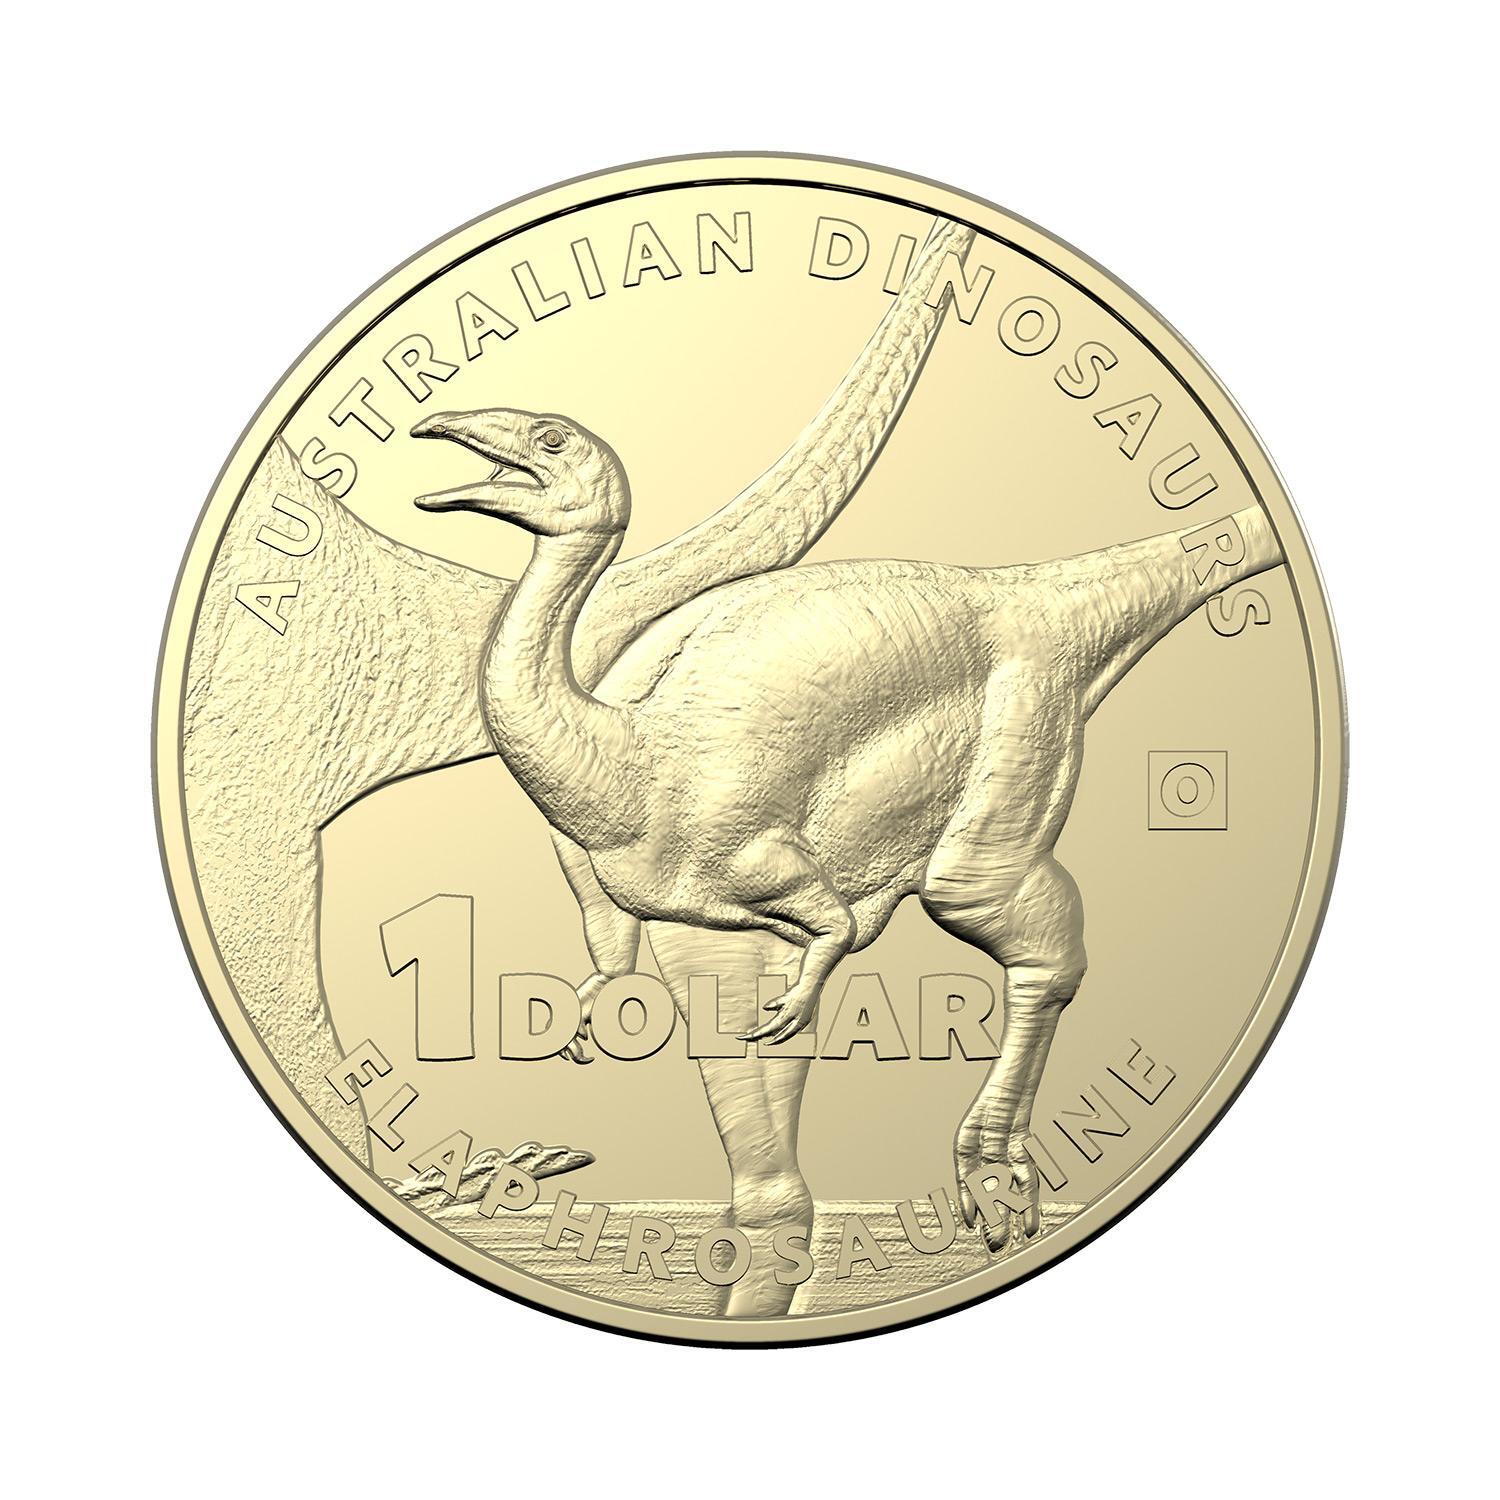 2022 Australian Dinosaurs Uncirculated Privy Mark Four Coin Collection